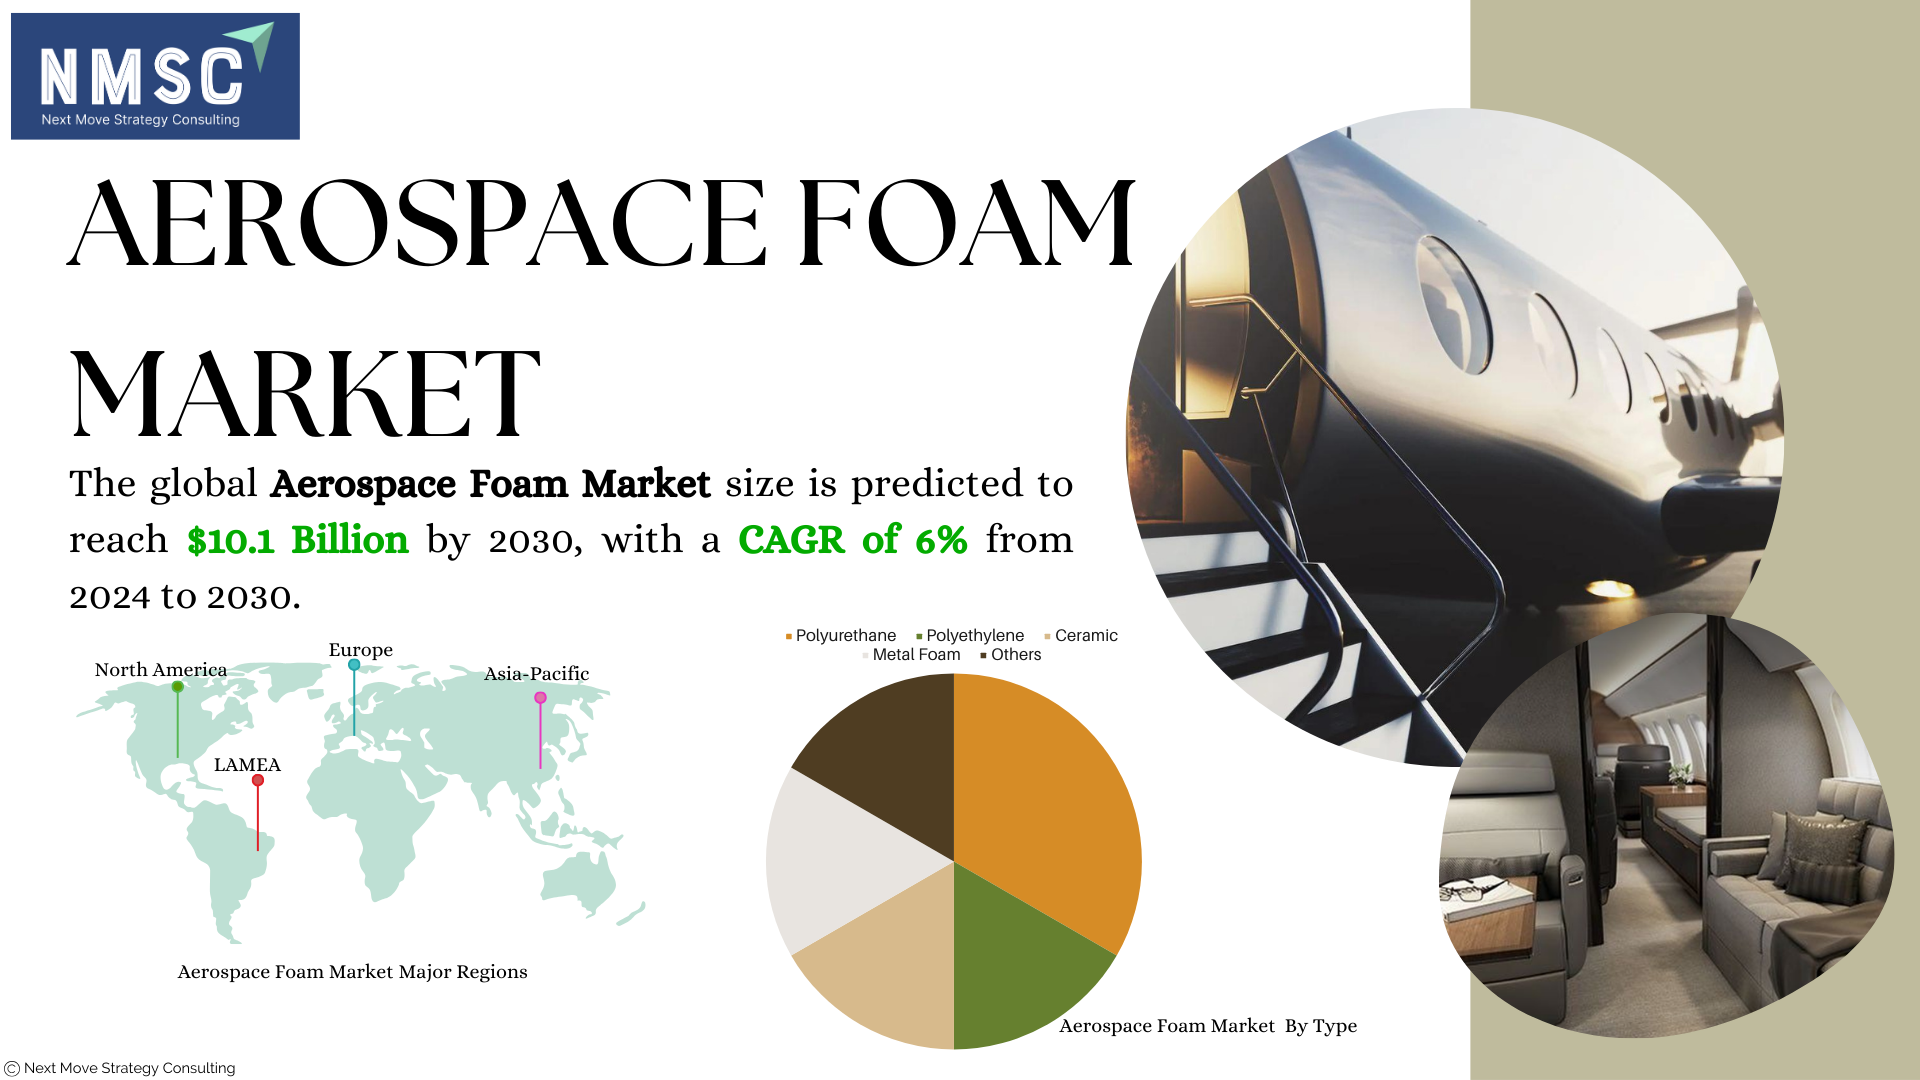 Aerospace Foam Market Poised for $10.1B Growth by 2030